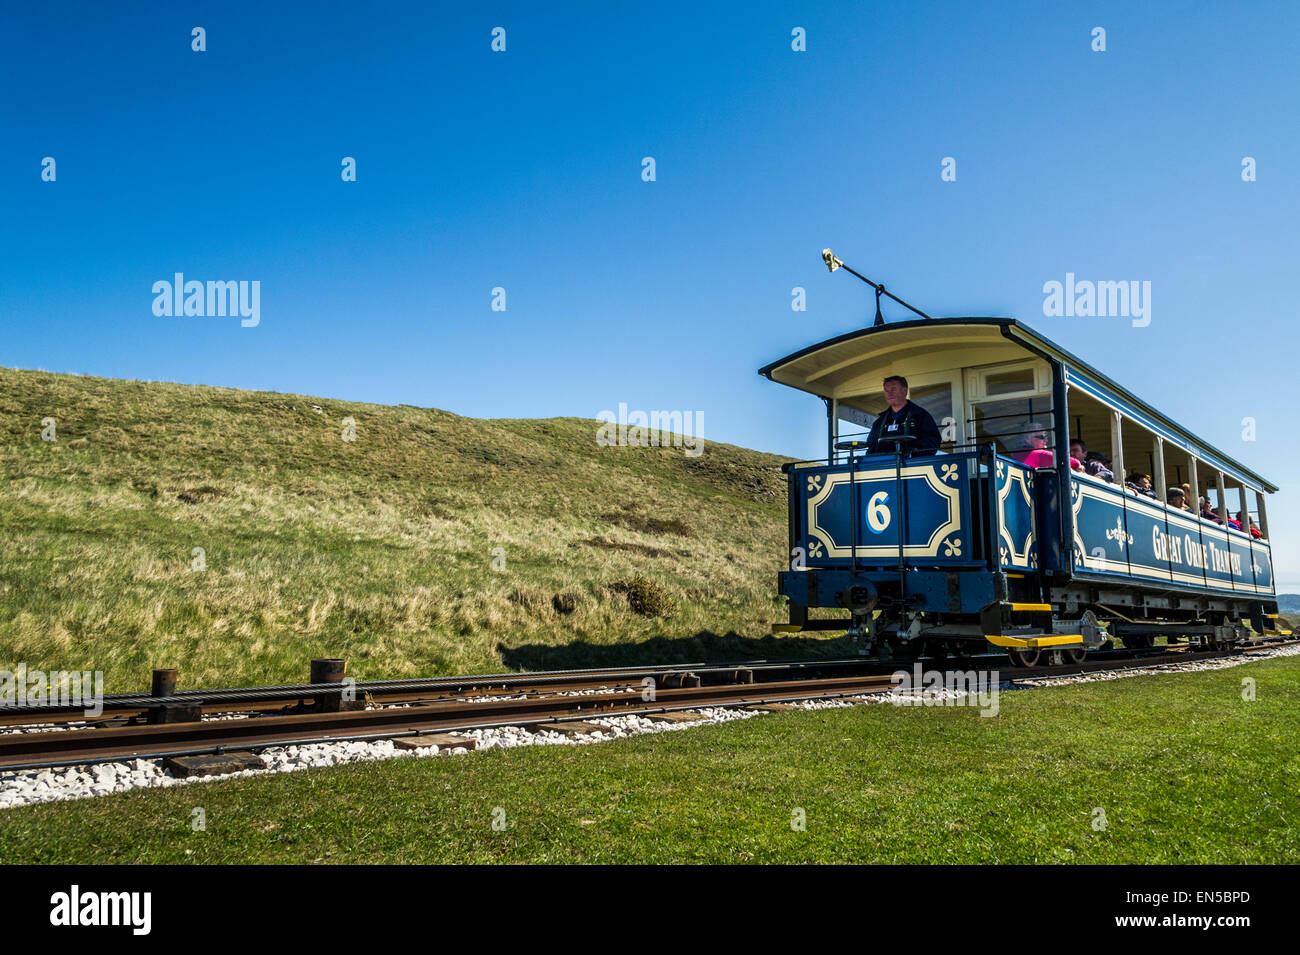 Llandudno Great Orme Tramway in Nord Wales Stockfoto